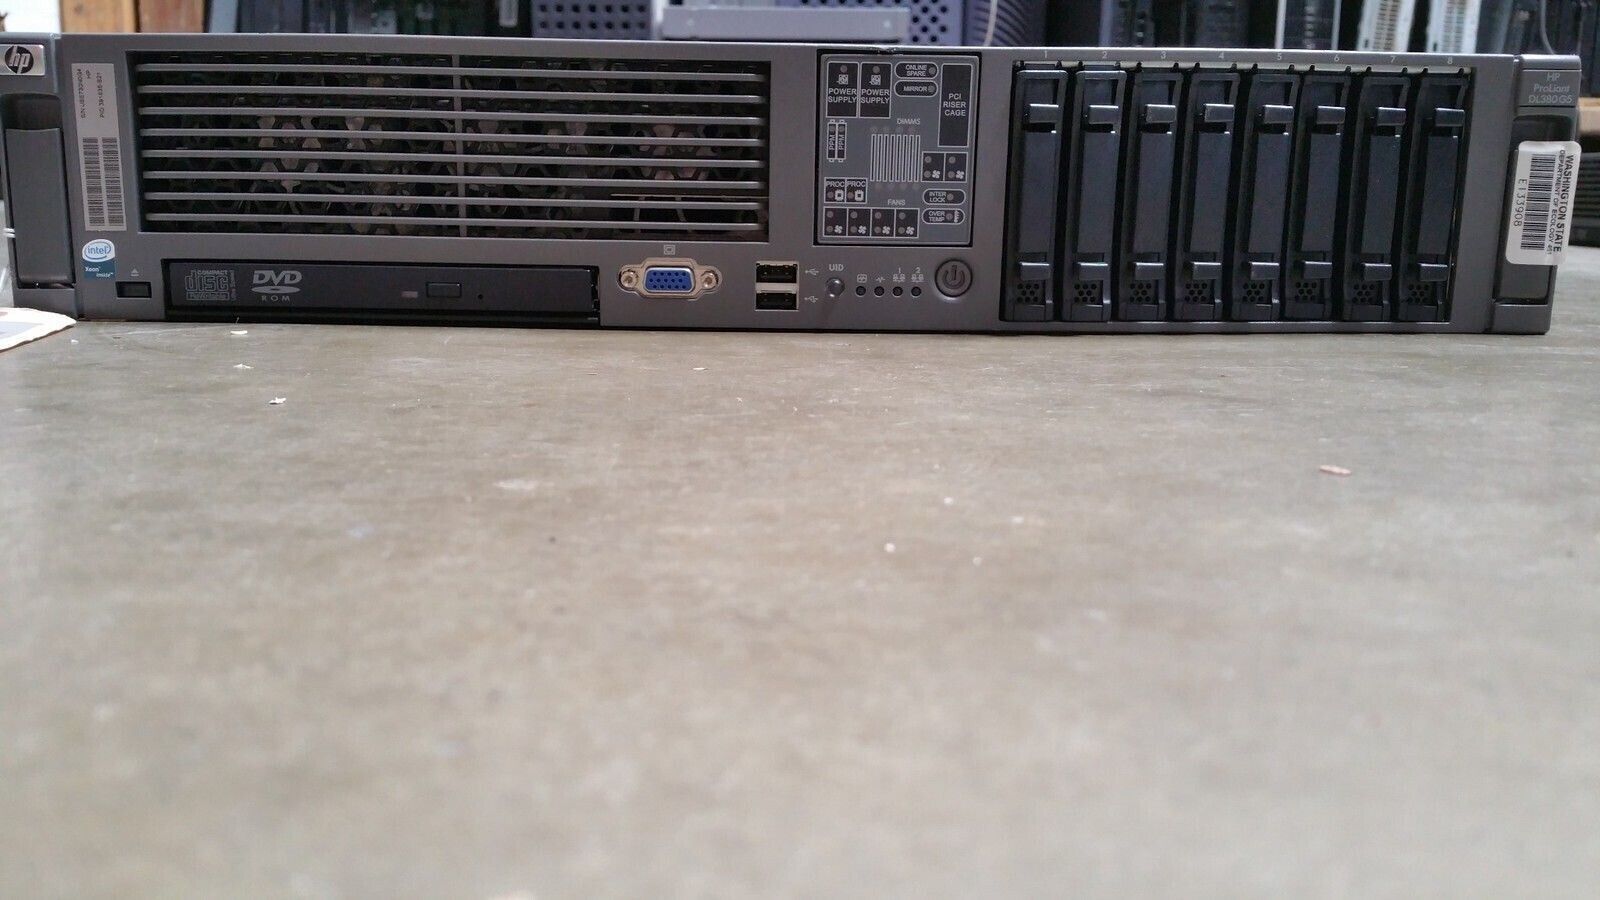 HP PROLIANT DL380 G5 SERVER x2 DUAL CORE 3.00GHz 4GB RAM  P400 2PSU